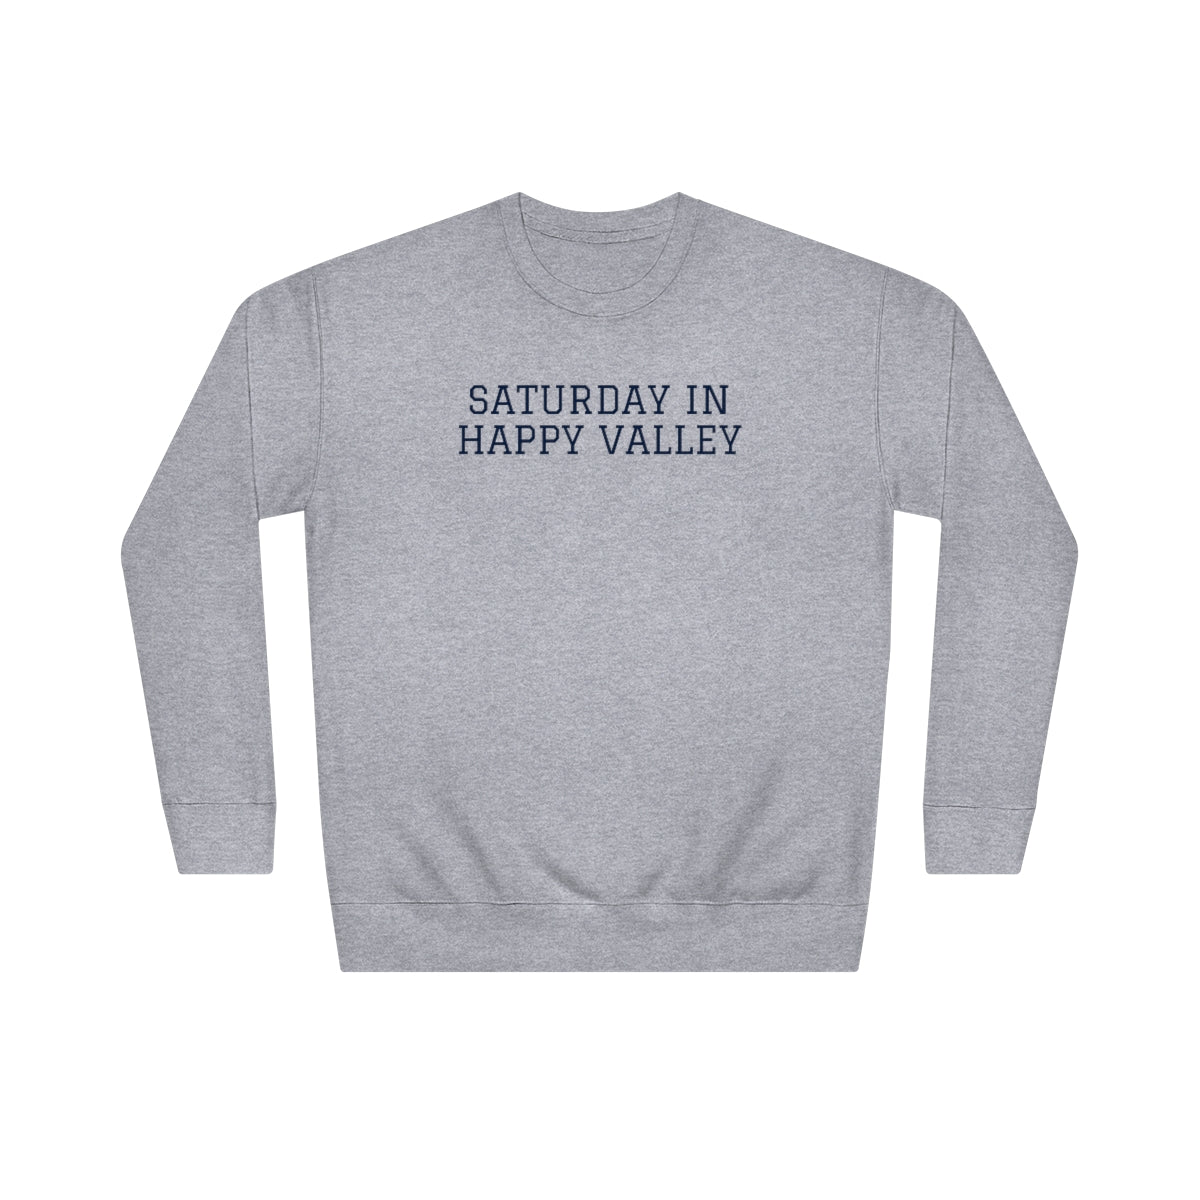 Penn State Crew Sweatshirt - GG - CH